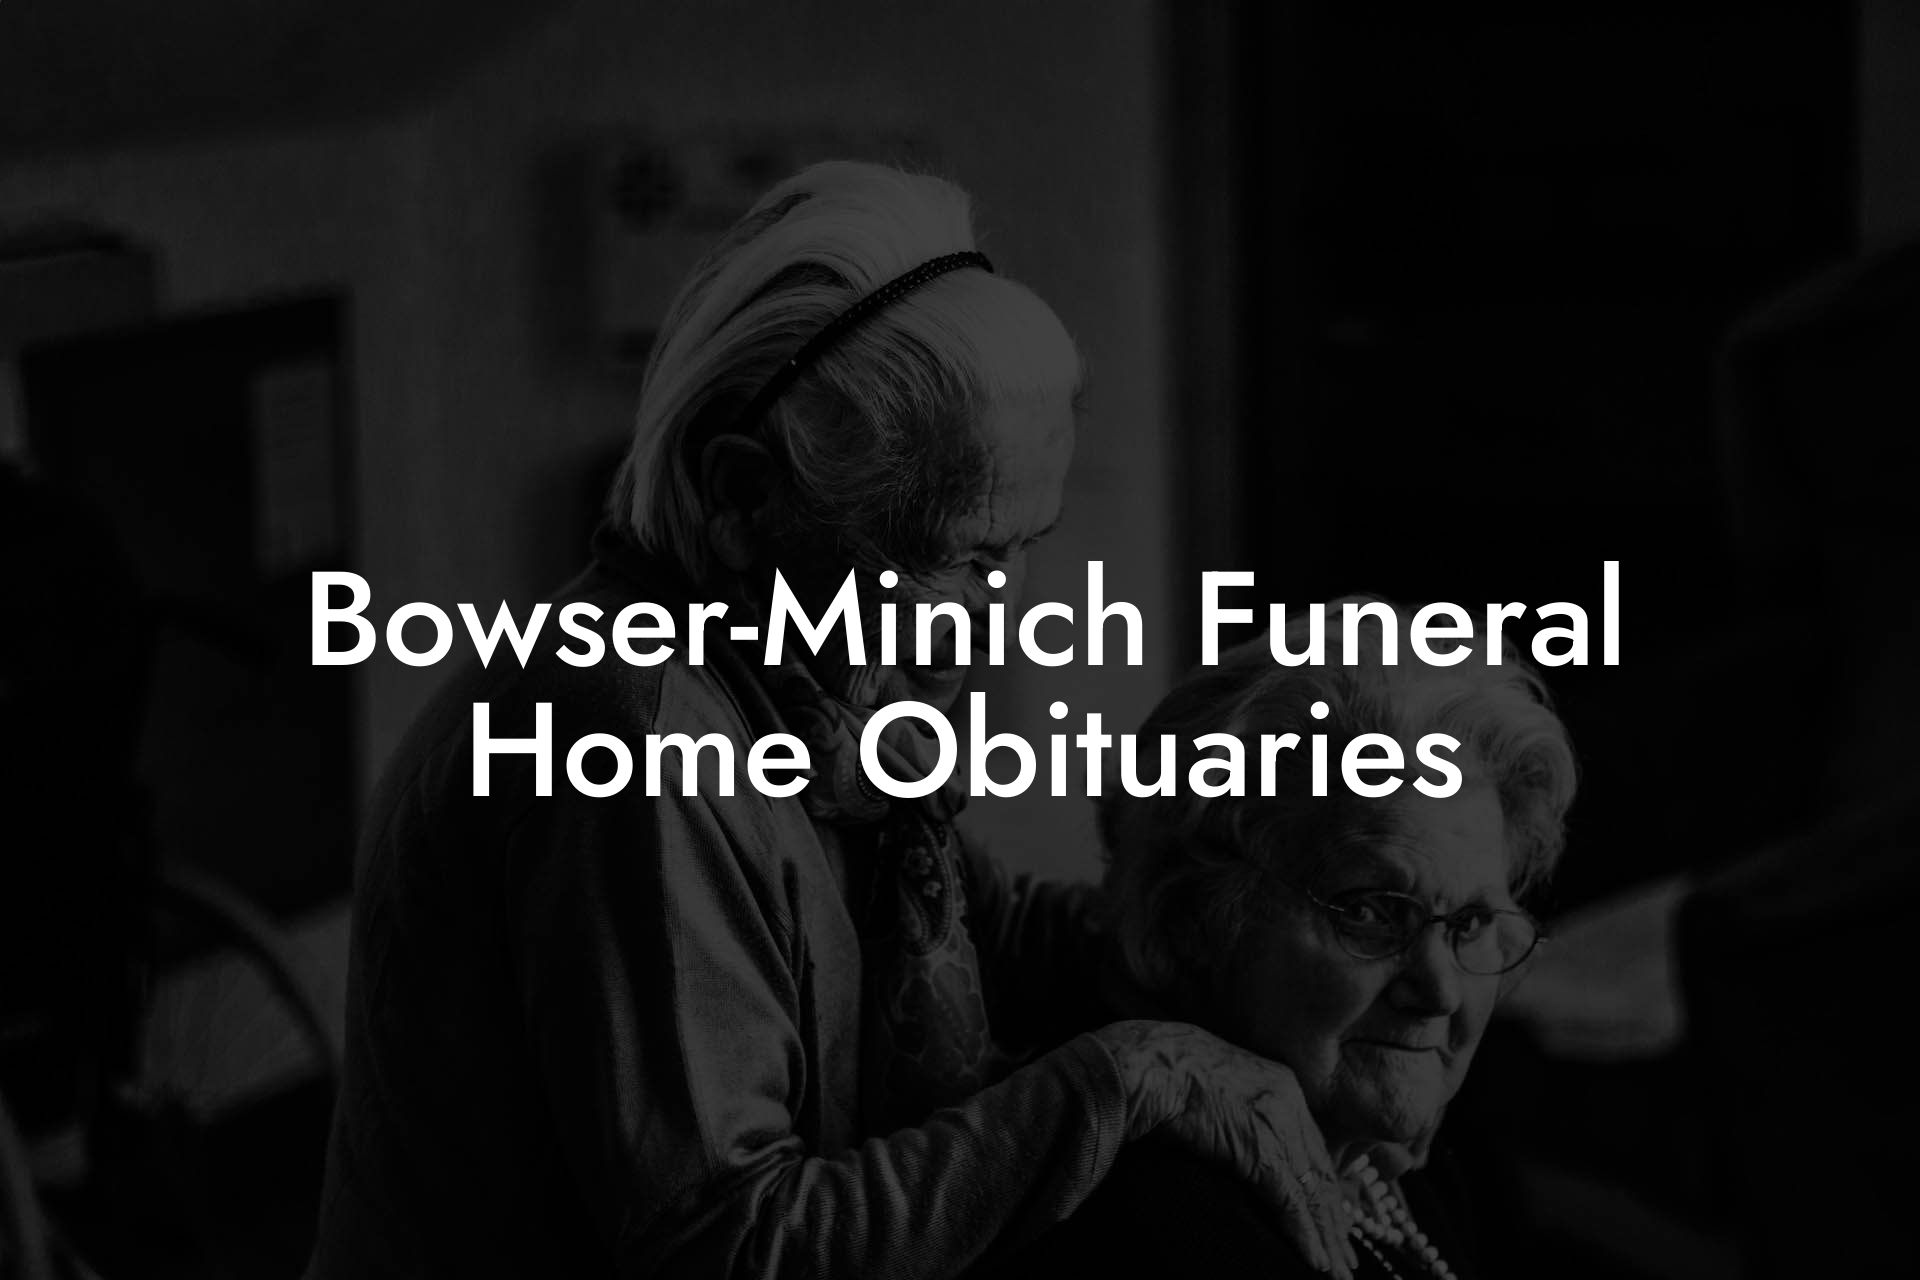 Bowser-Minich Funeral Home Obituaries